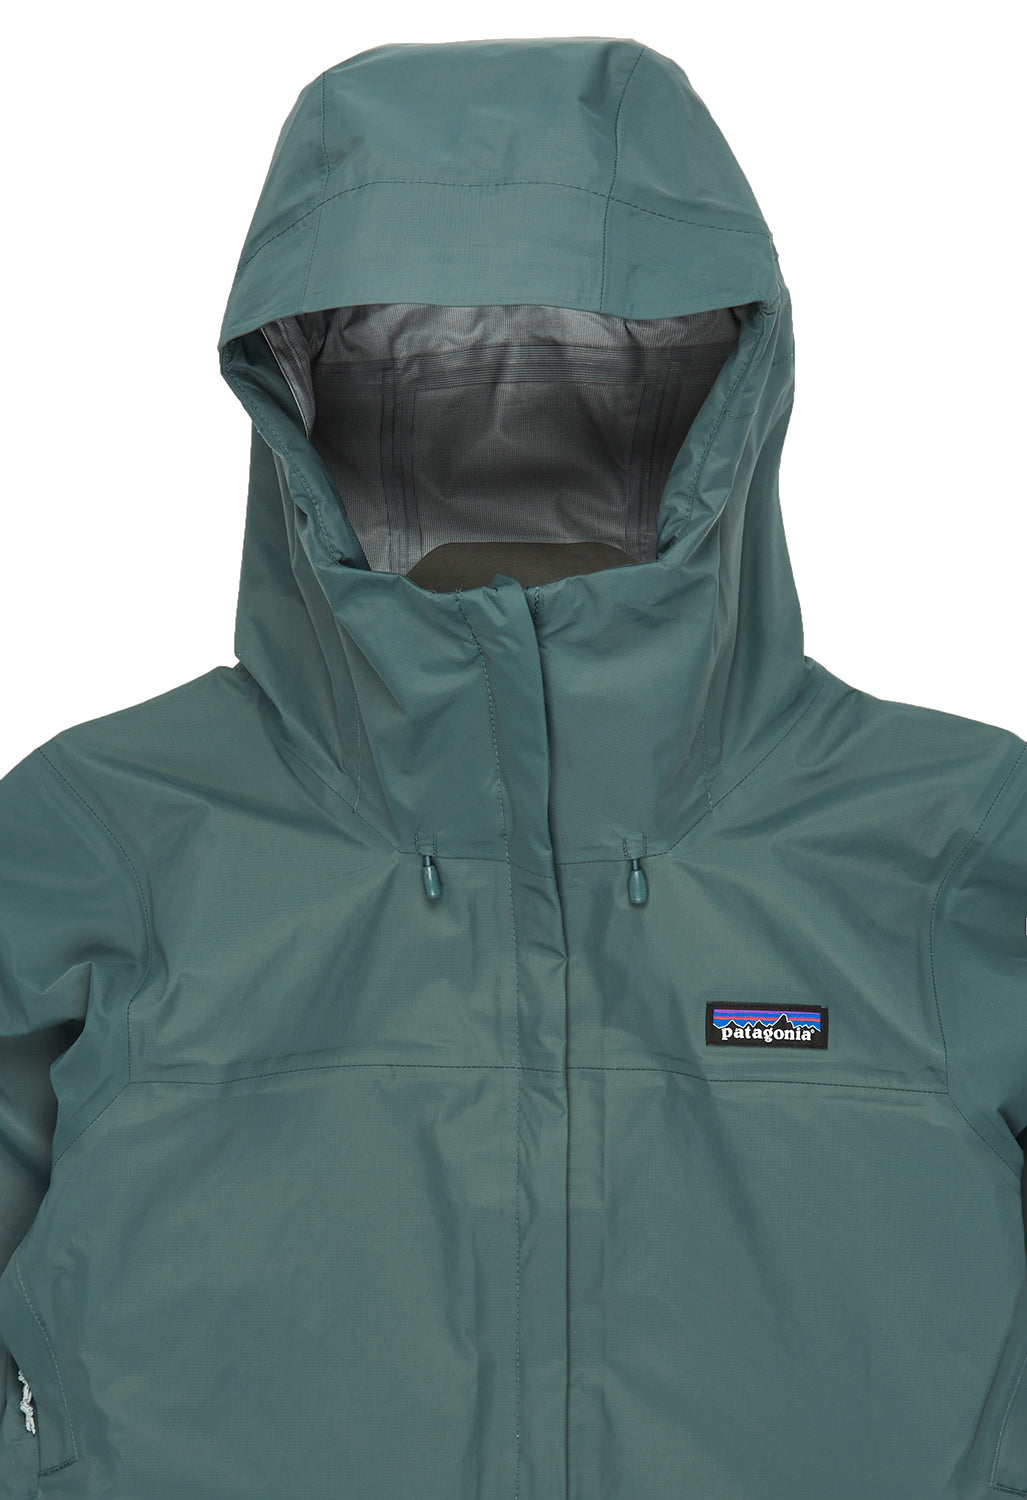 Patagonia Women's Torrentshell 3L Jacket - Nouveau Green